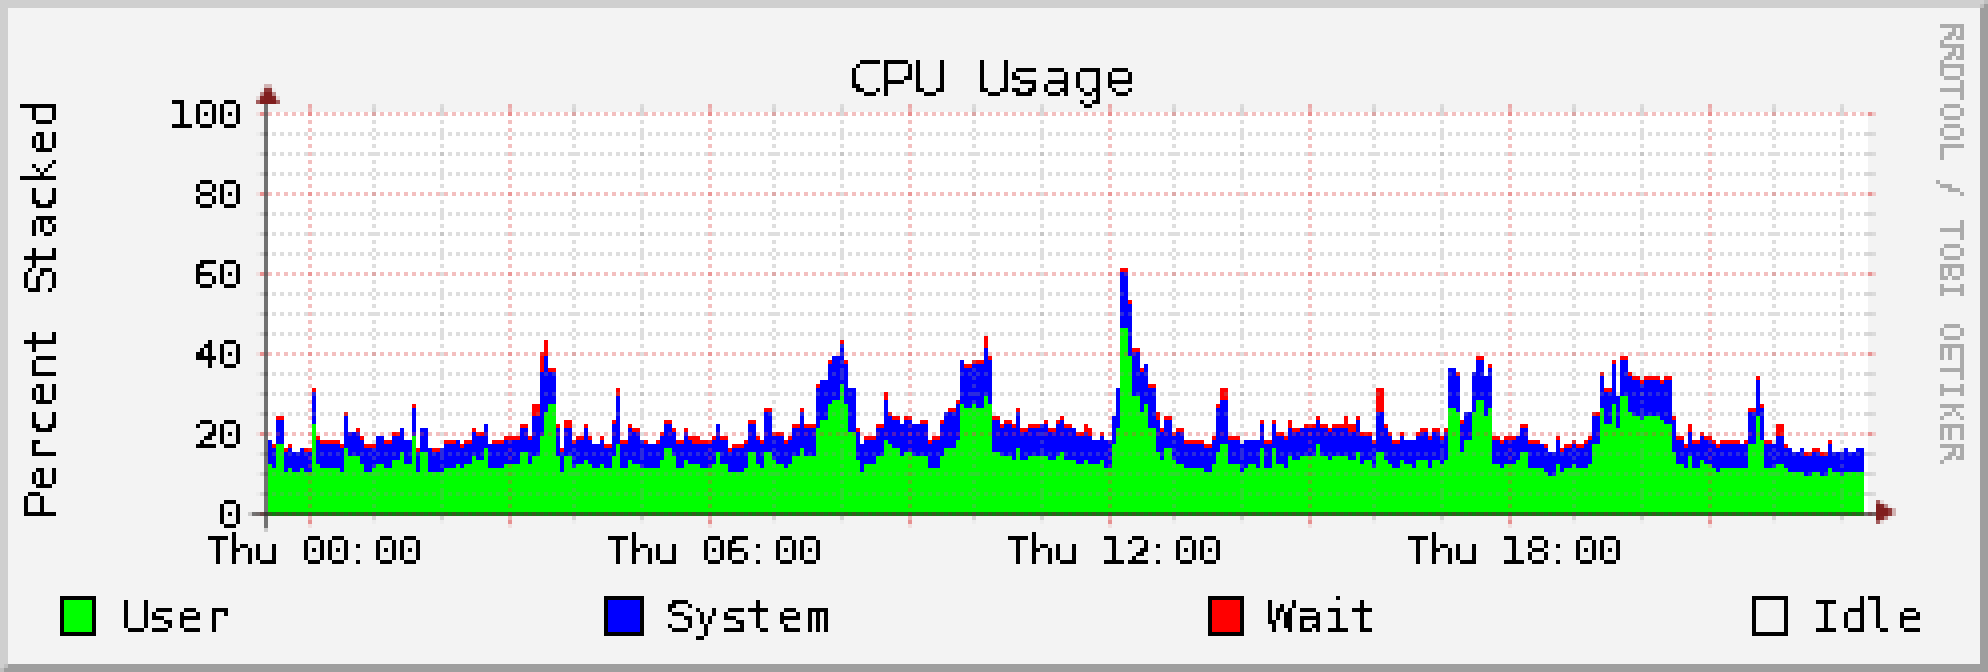 CPU usage graph